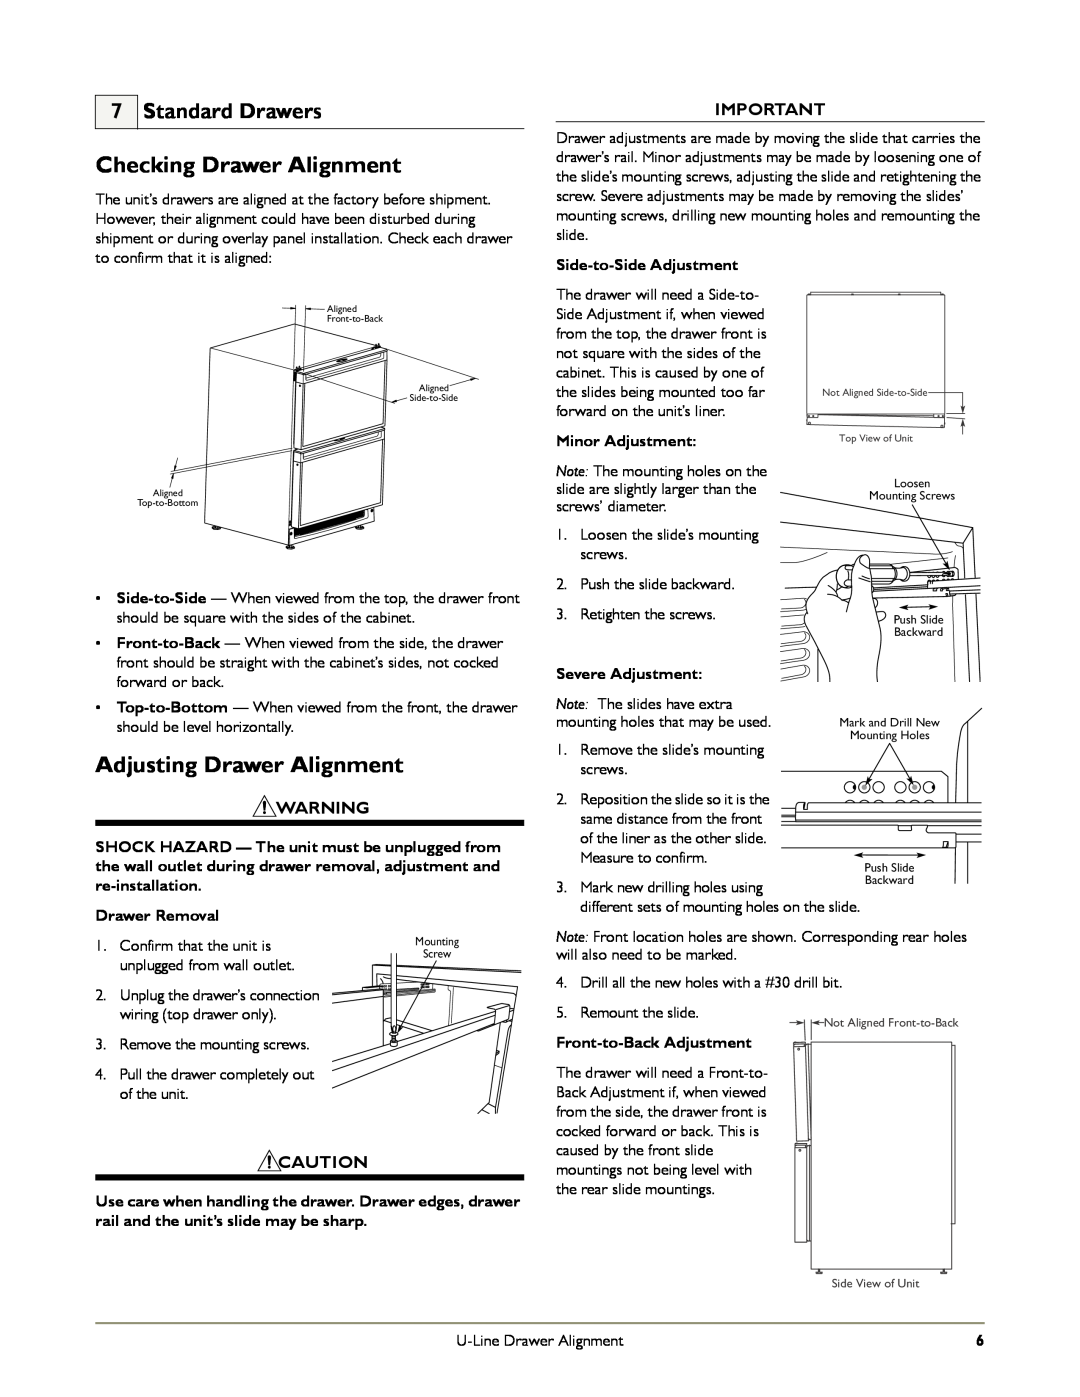 U-Line C2275DWROL, 2275DWRCOL manual Checking Drawer Alignment, Adjusting Drawer Alignment, Standard Drawers, Drawer Removal 